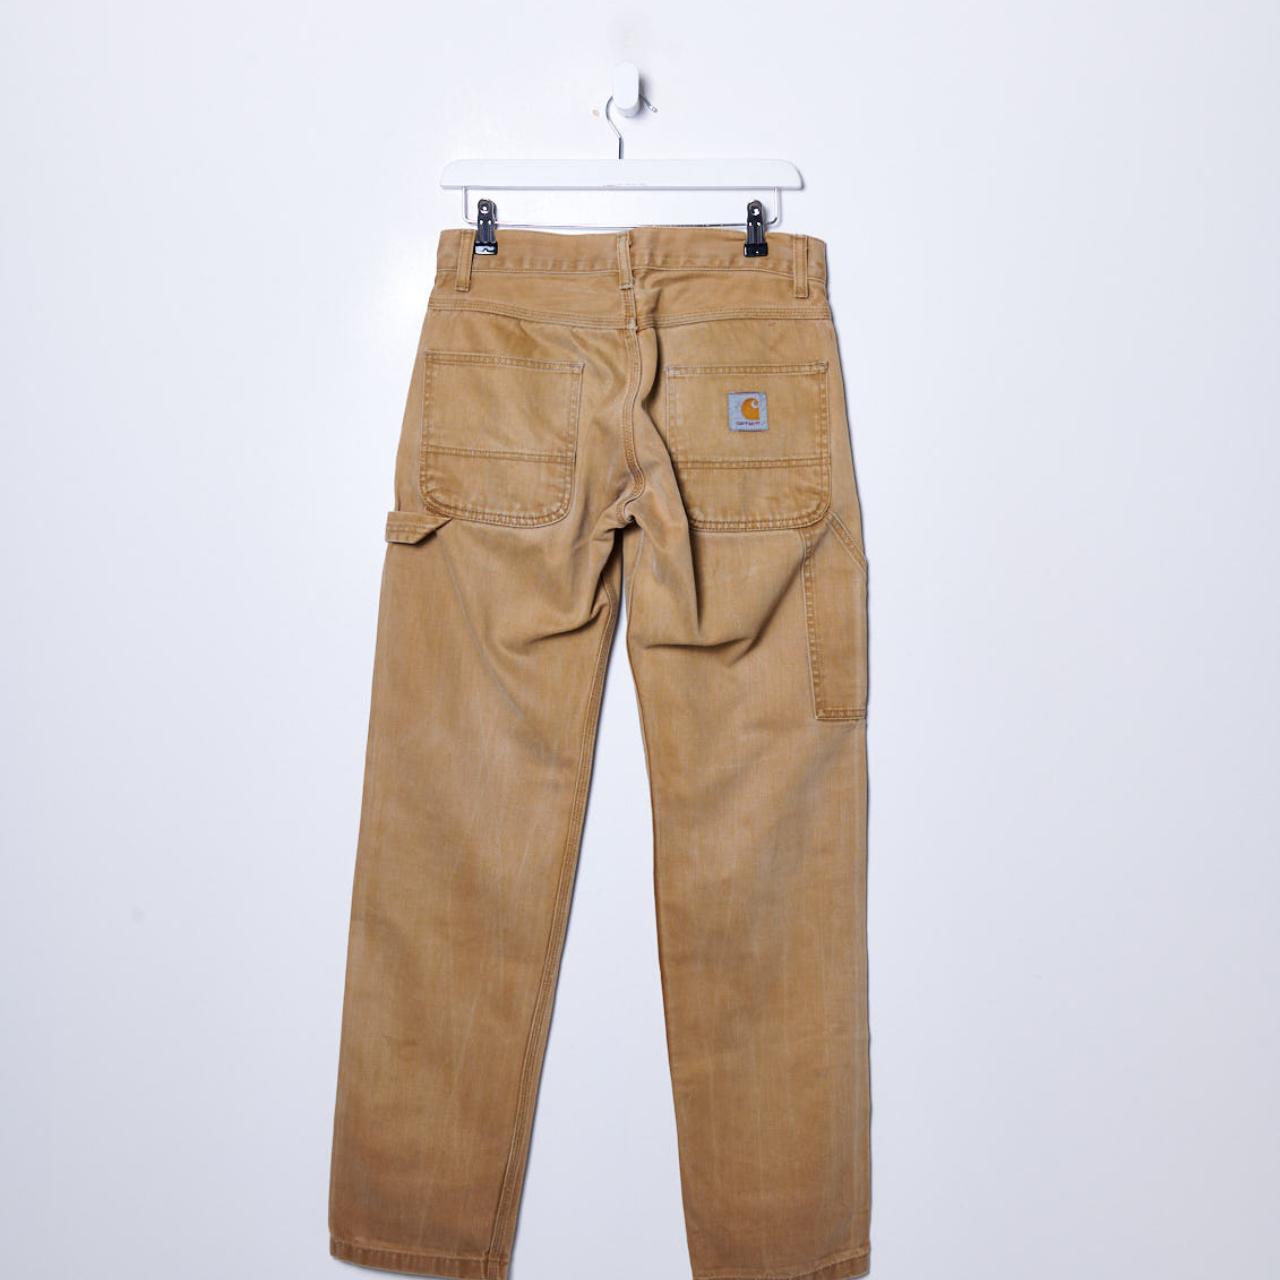 Vintage Men's Carhartt Jeans. - Width measurement... - Depop